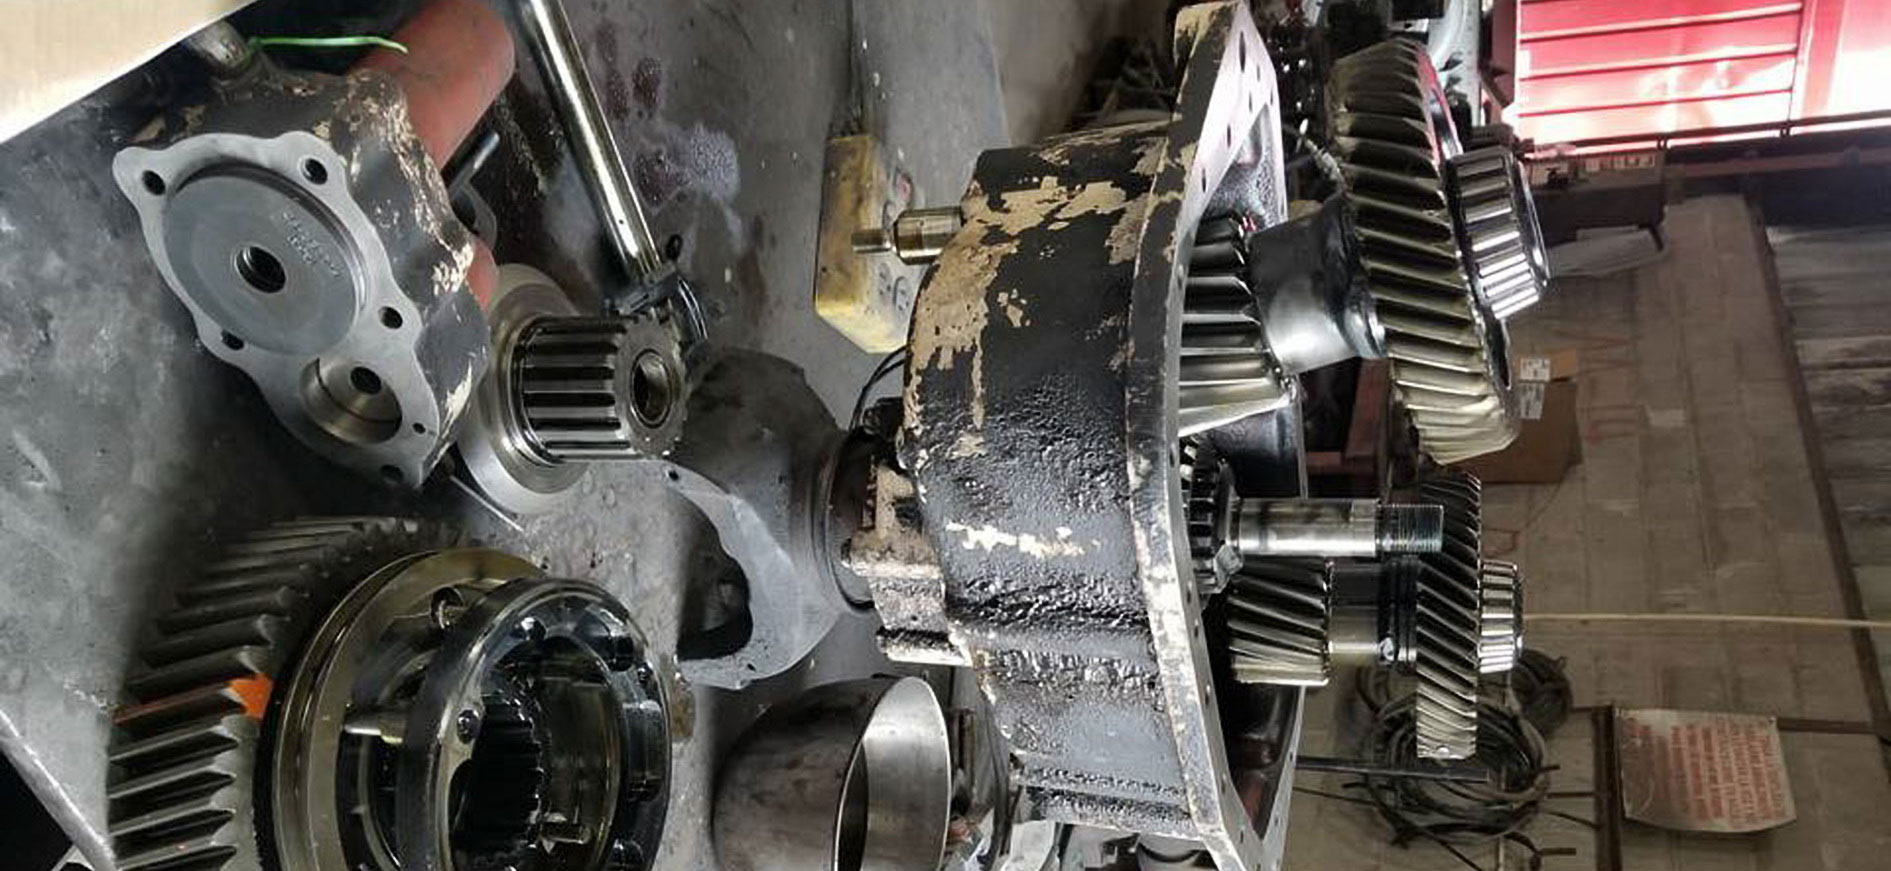 Transmission Repair and differential rebuild or repair in Edinburg at the US 281 Truck And Trailer Services LLC